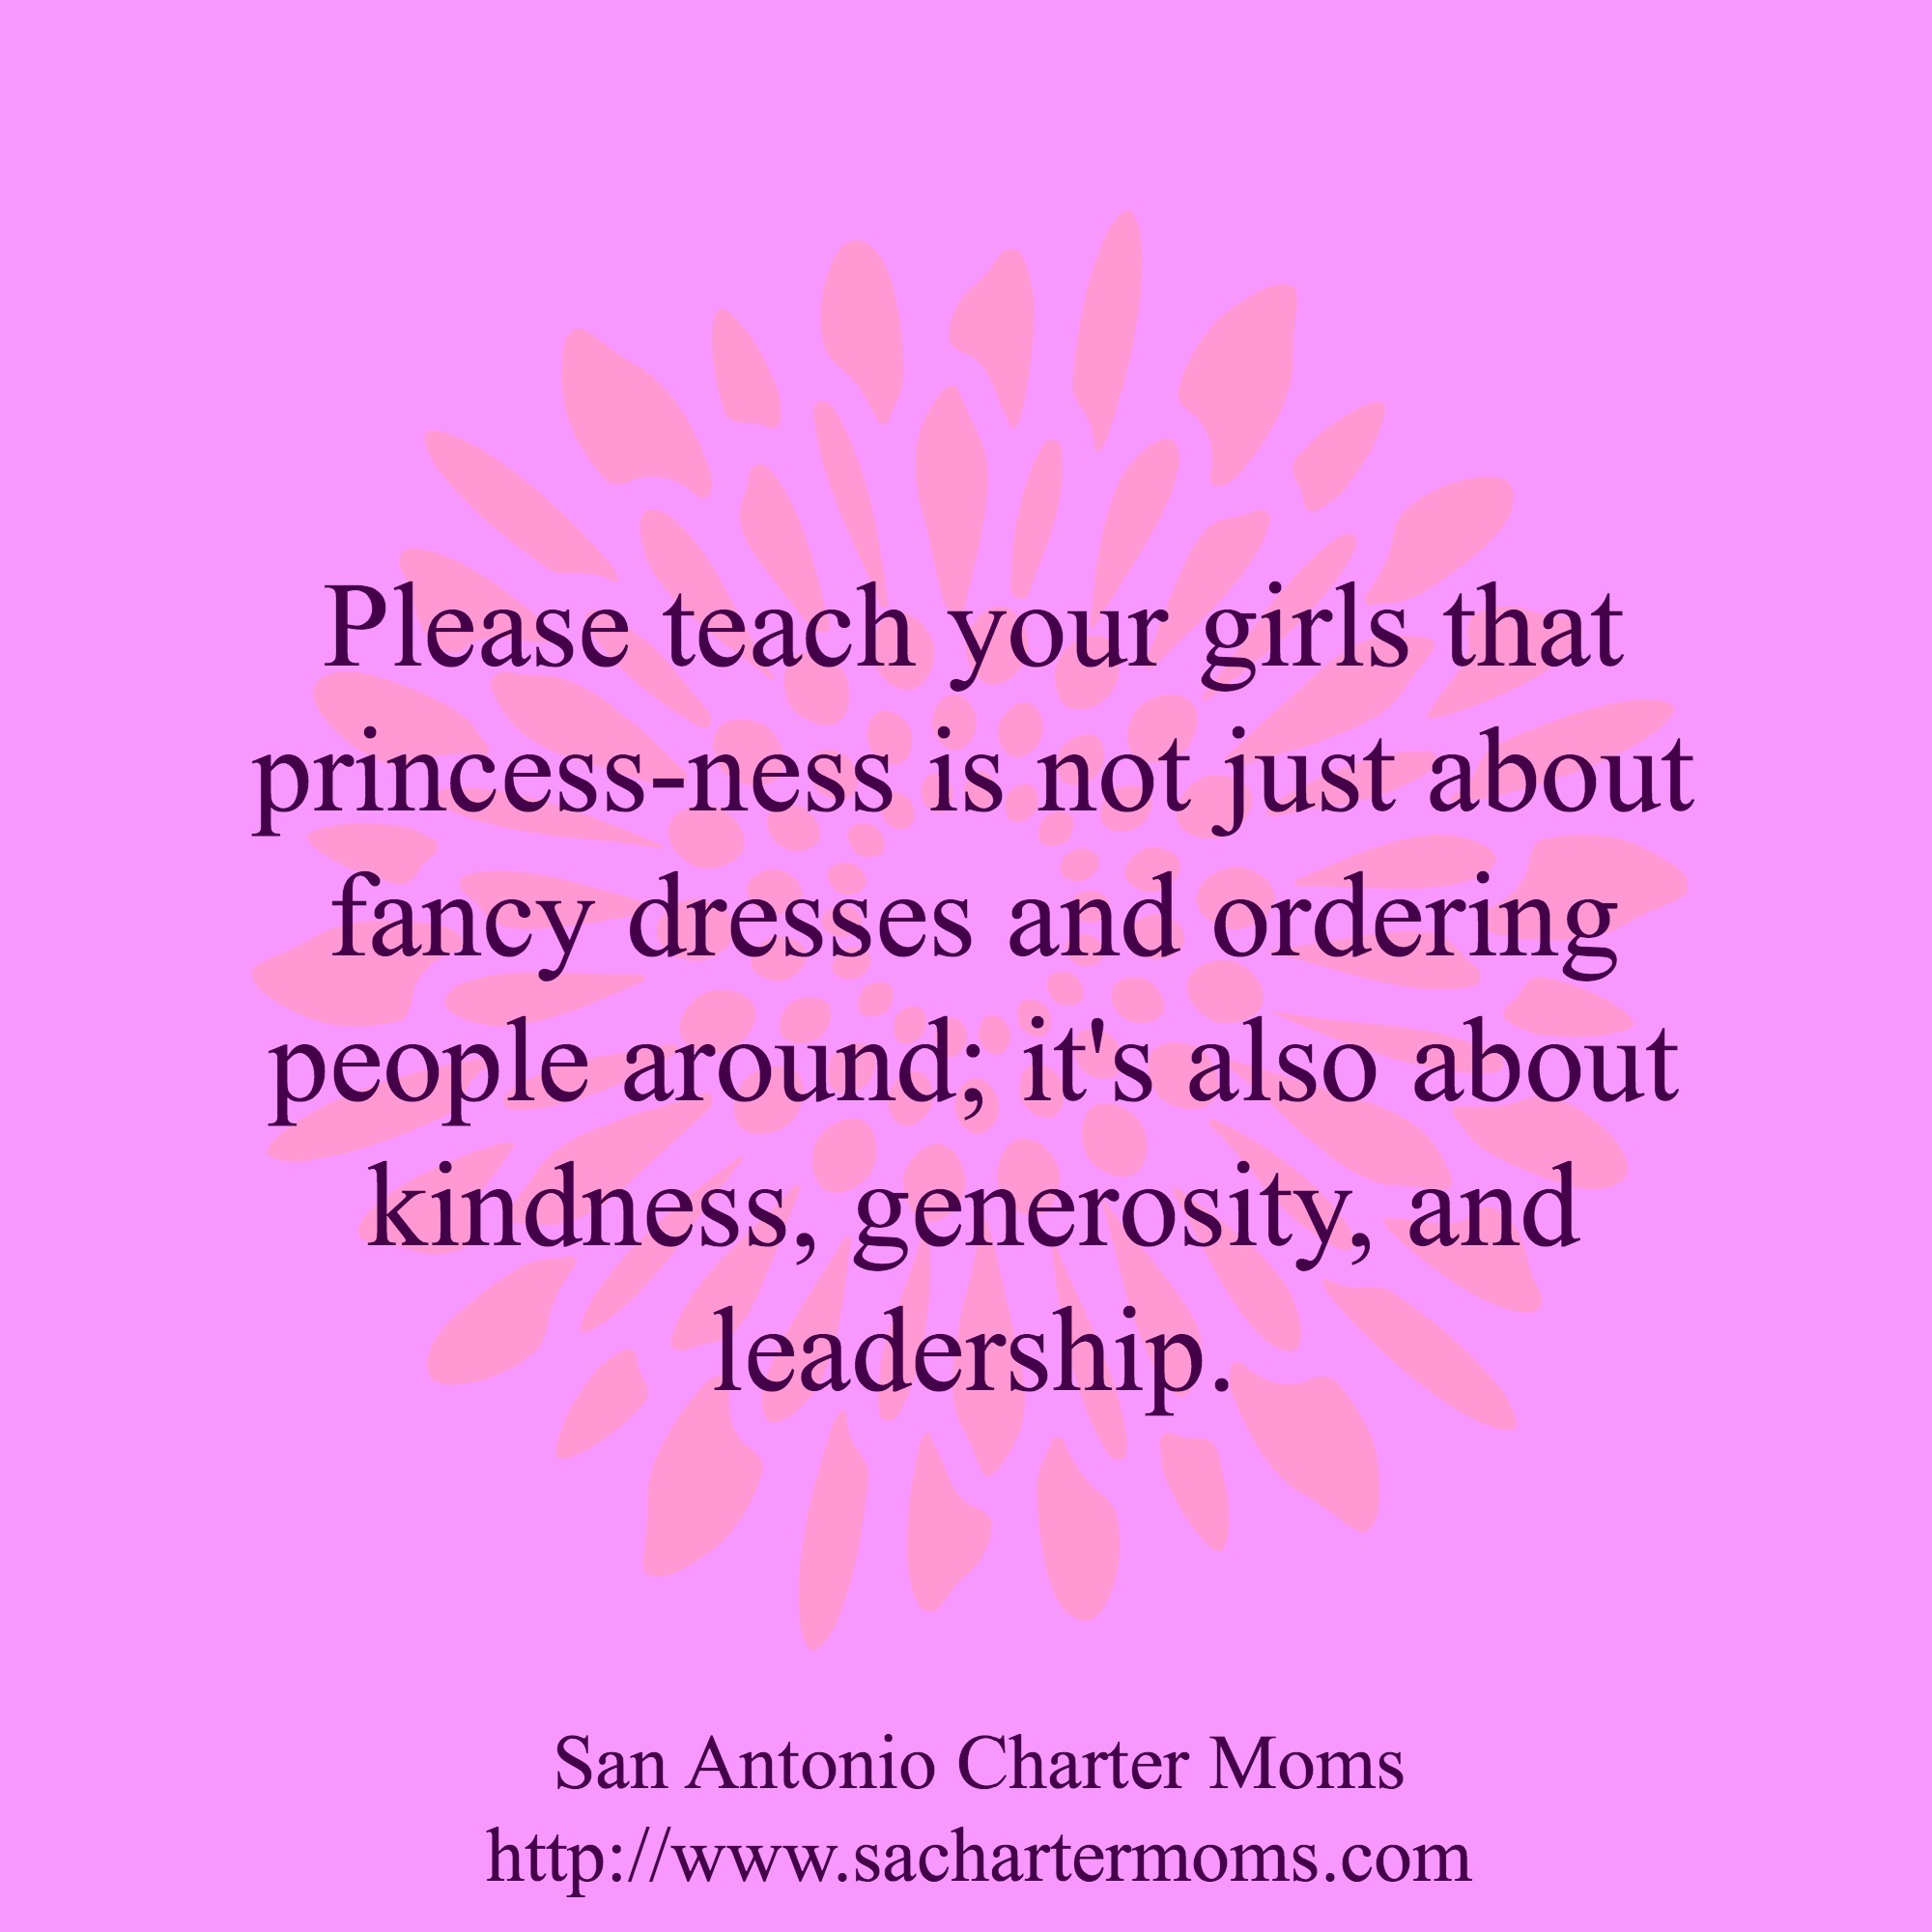 Princess-ness is about kindness, generosity, leadership | San Antonio Charter Moms